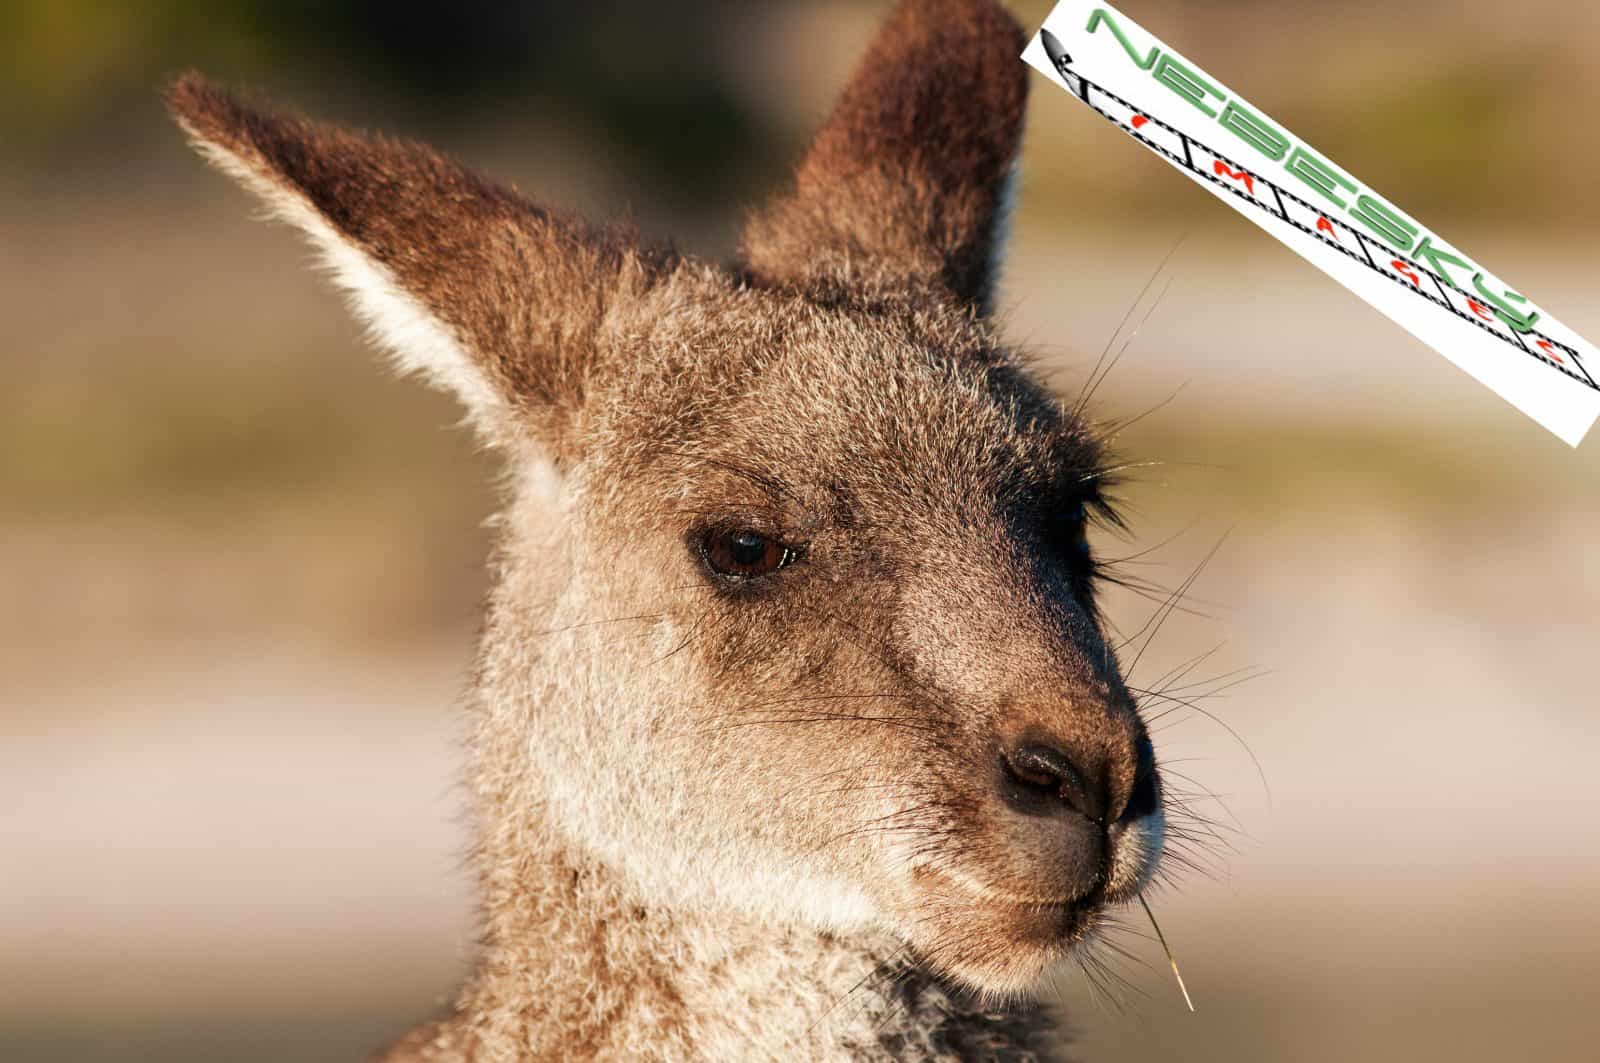 Kangaroo chewing on grass.